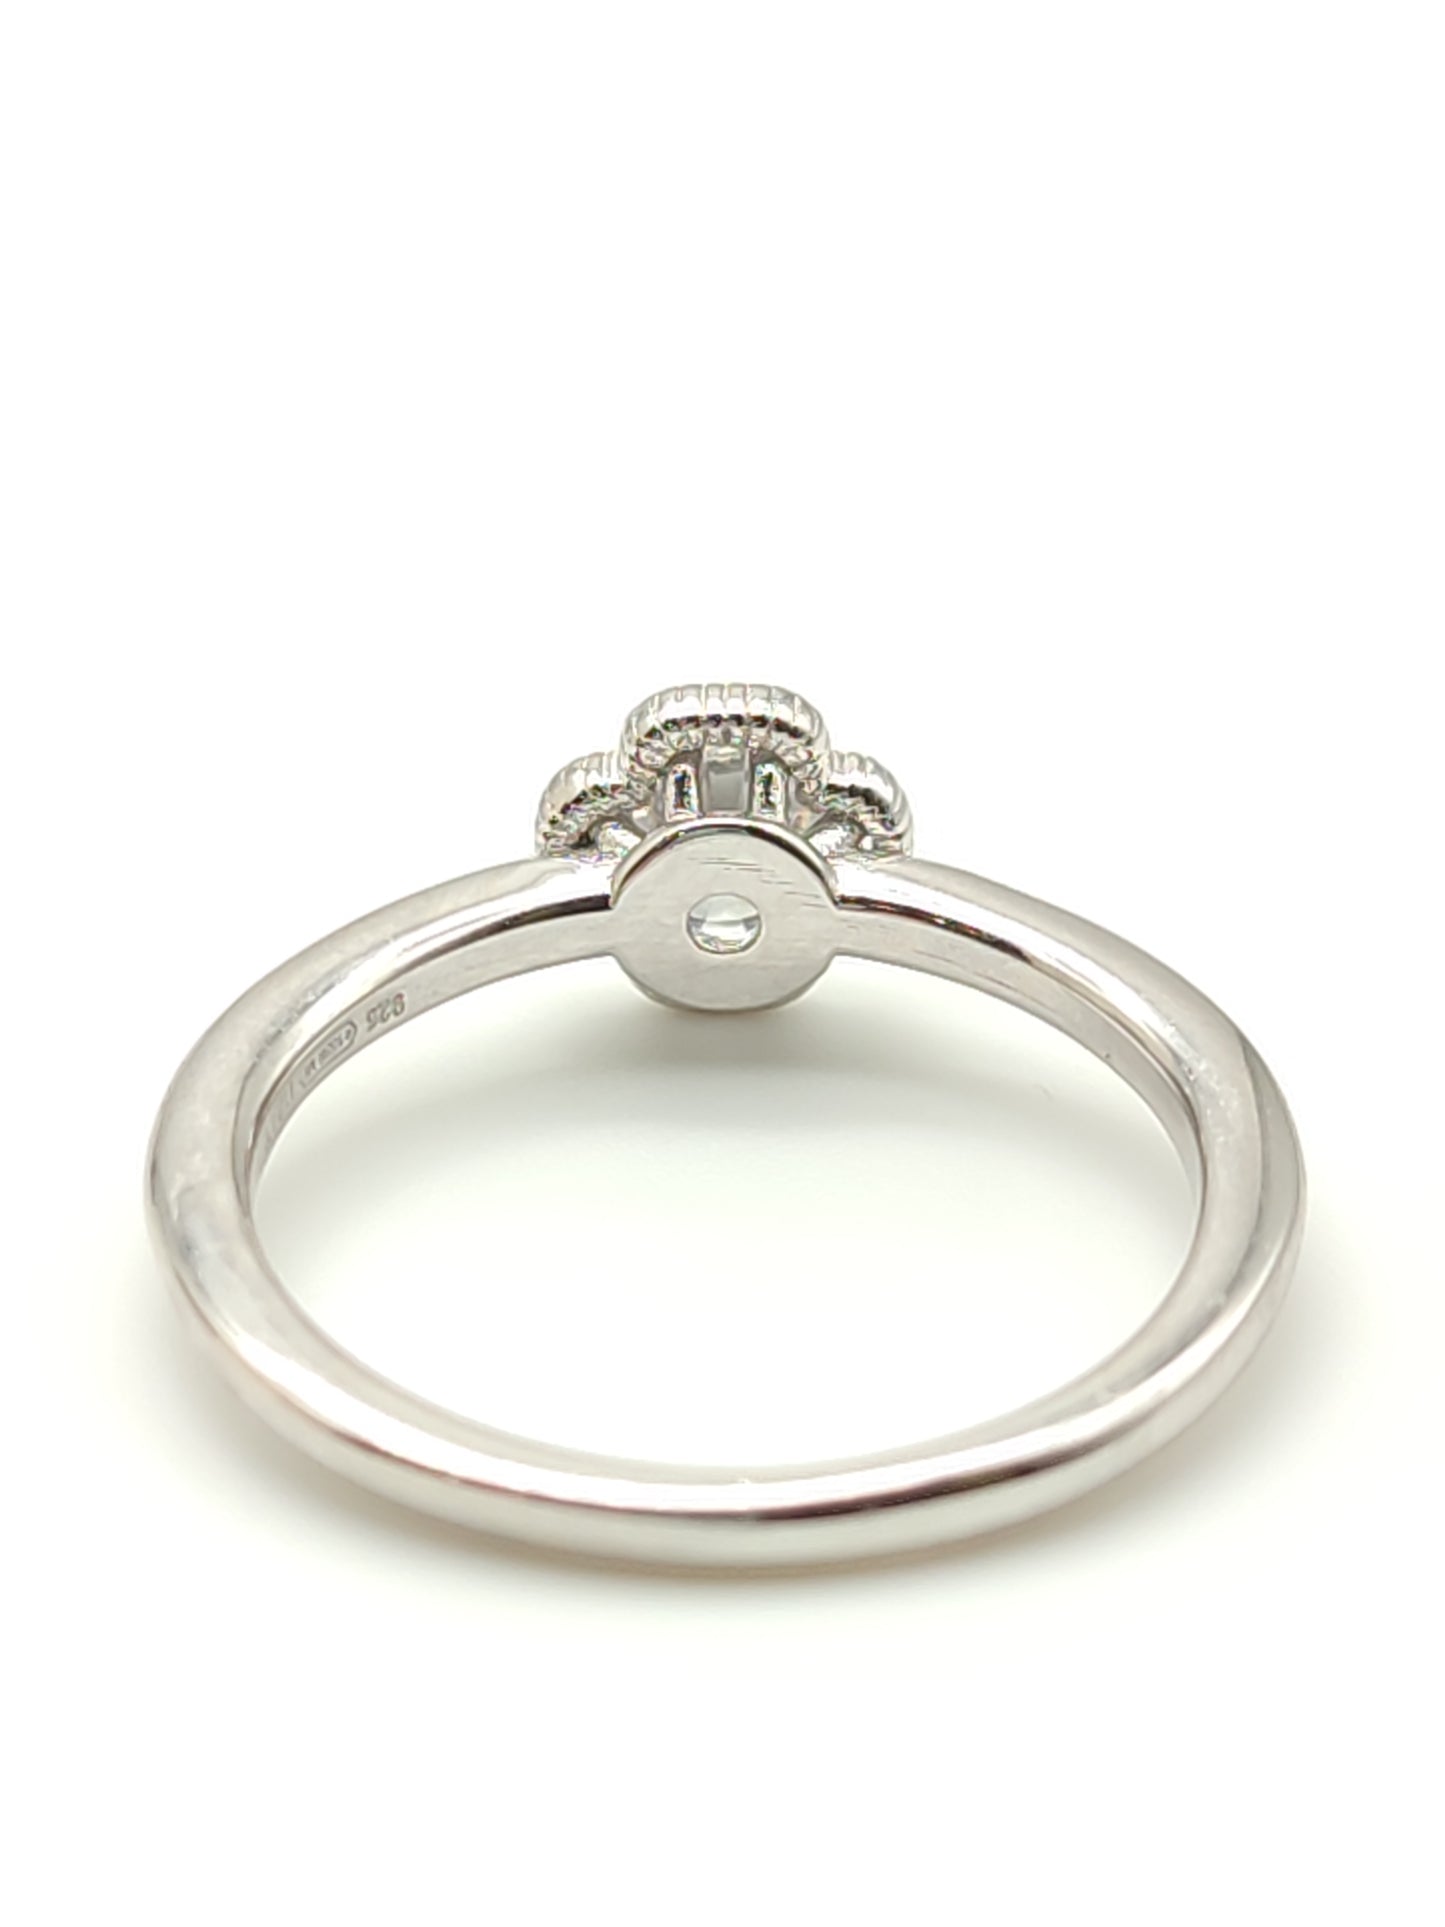 Four-leaf clover silver ring